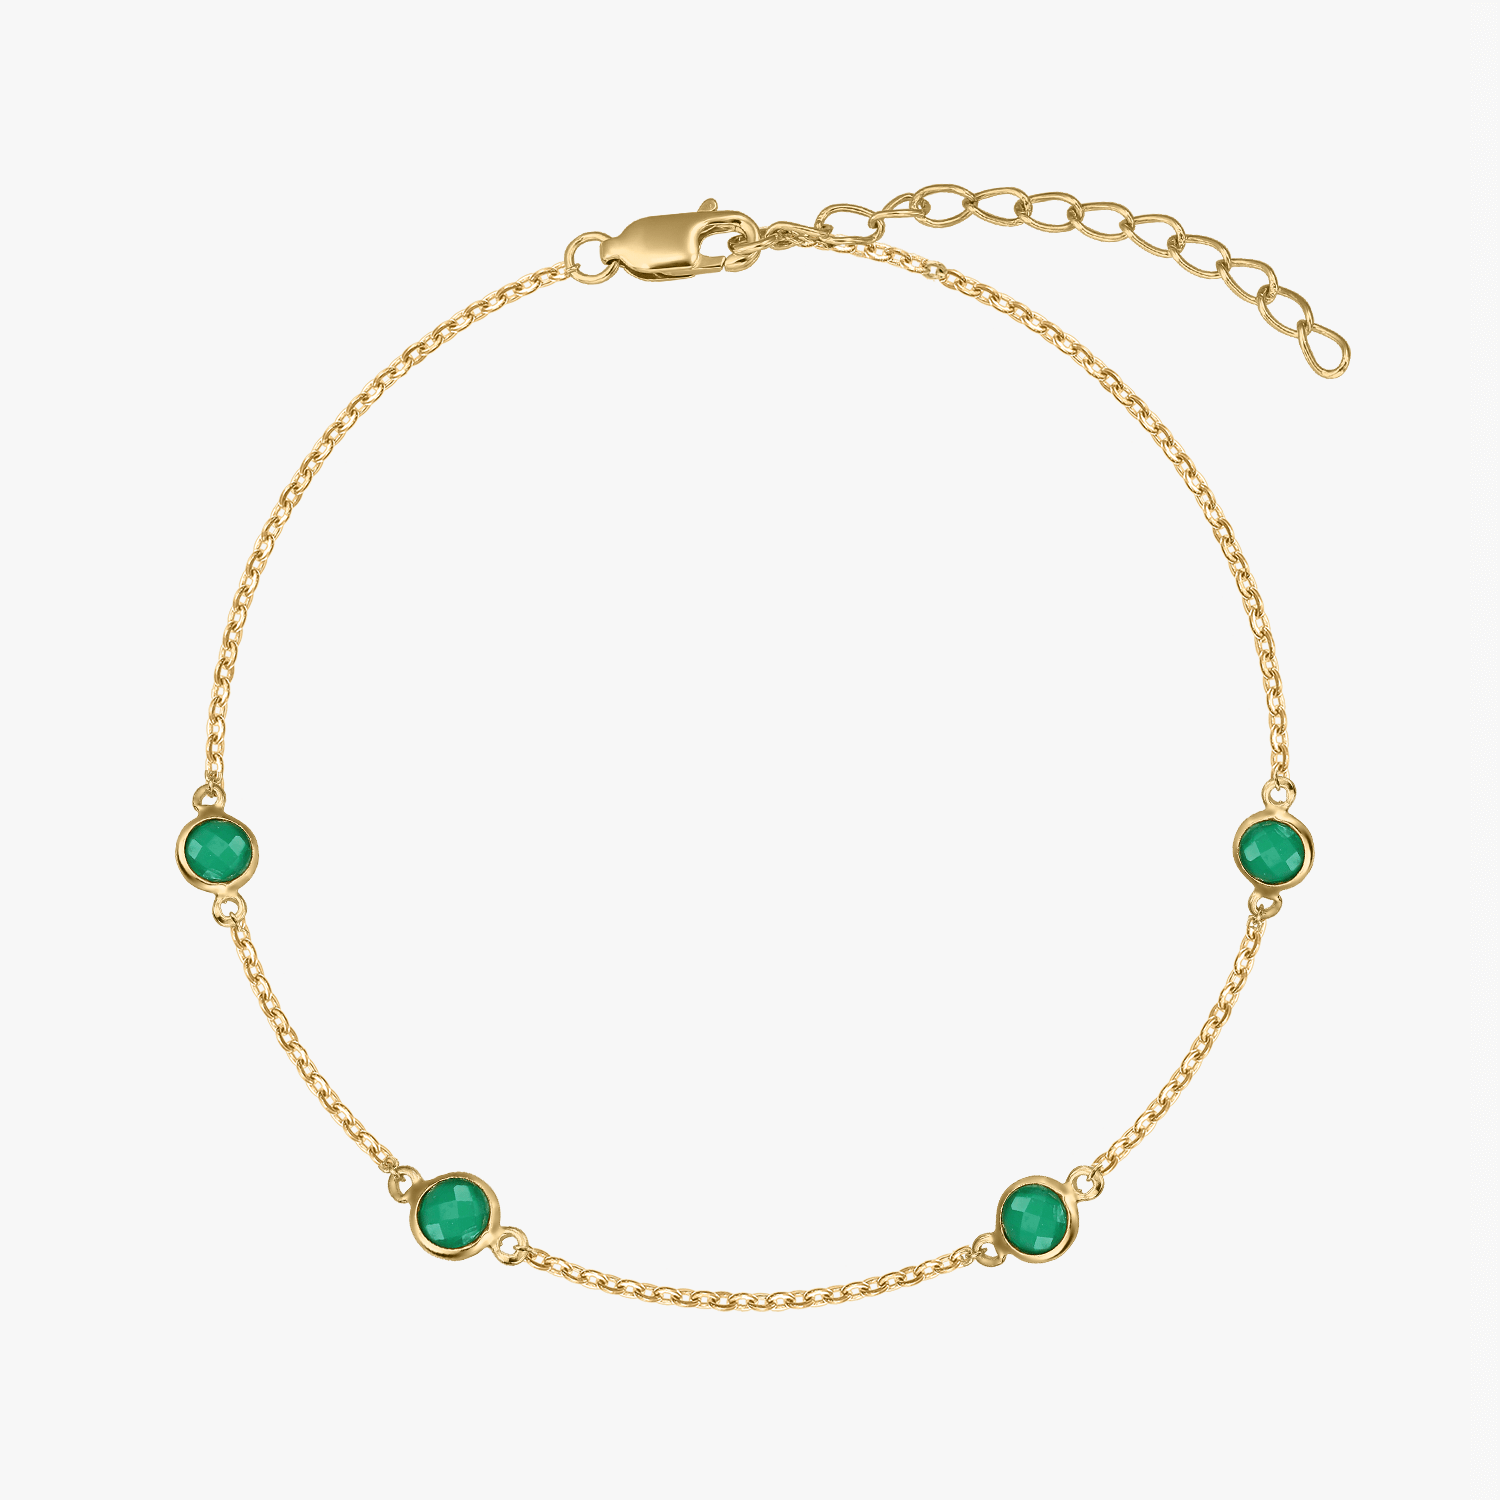 Birthstone Golden May Silver Bracelet - Green Onyx